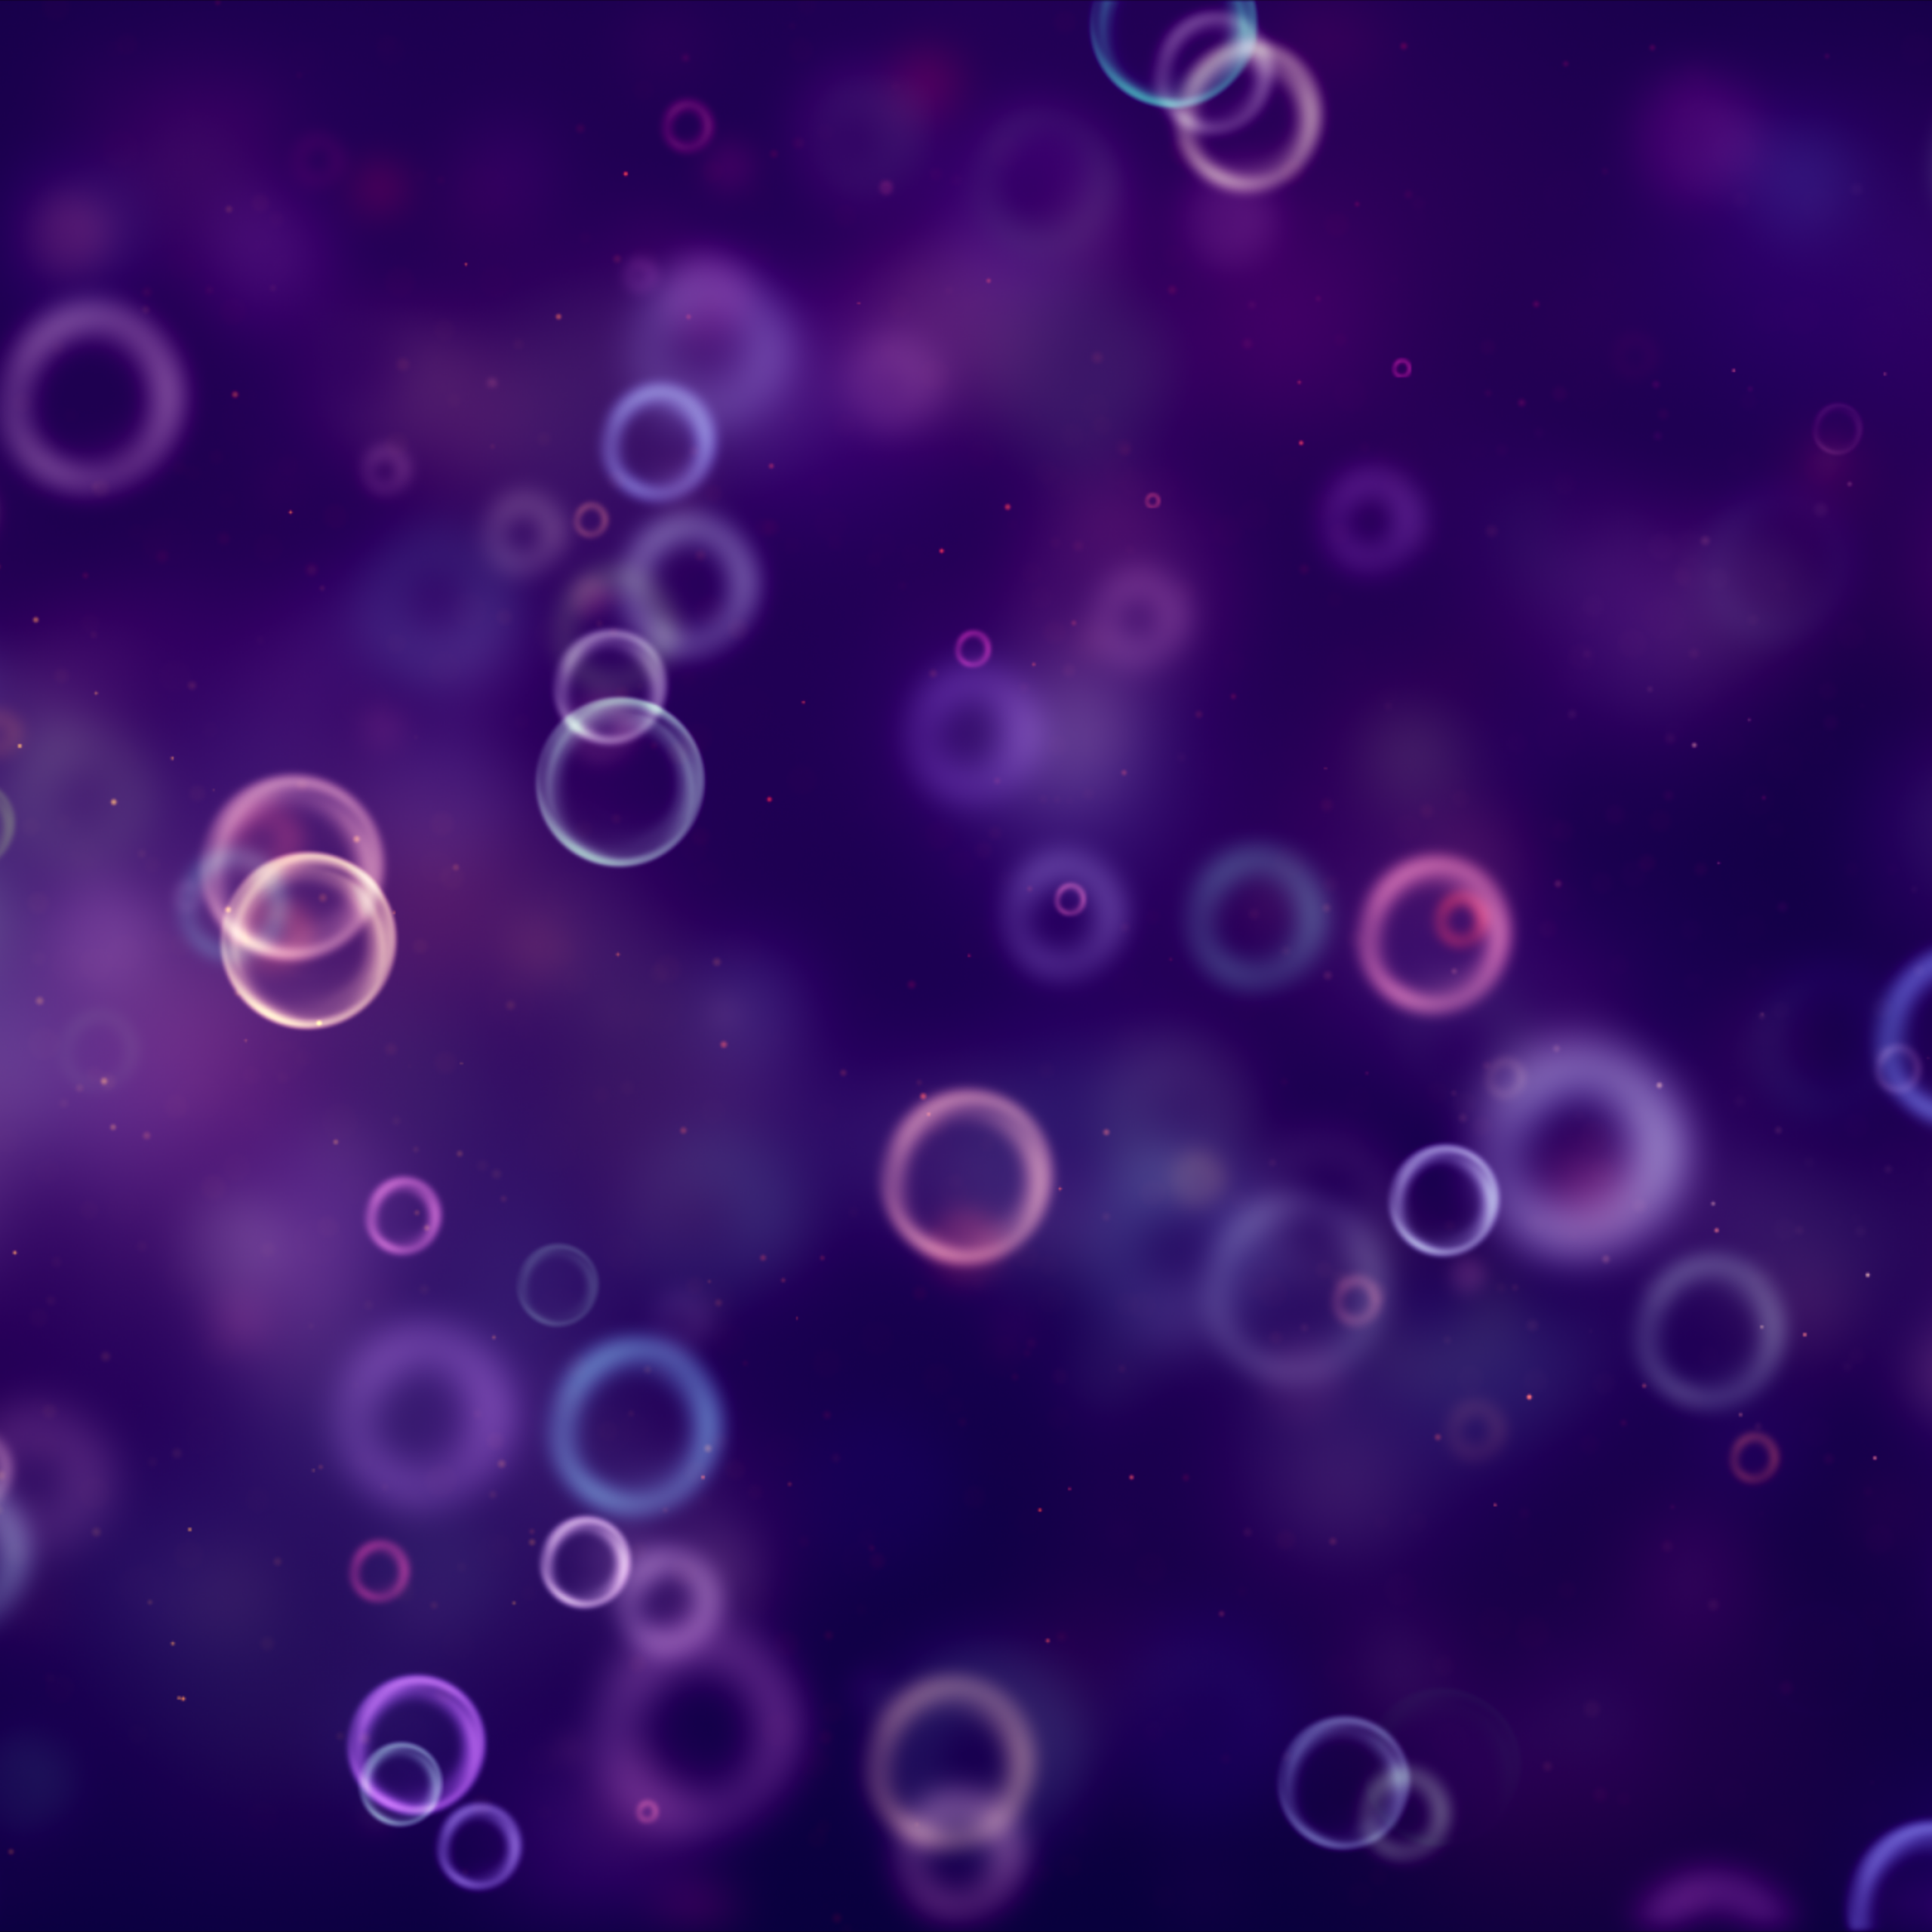 Bubbles Wallpaper 4K, Bokeh, Abstract, #4624